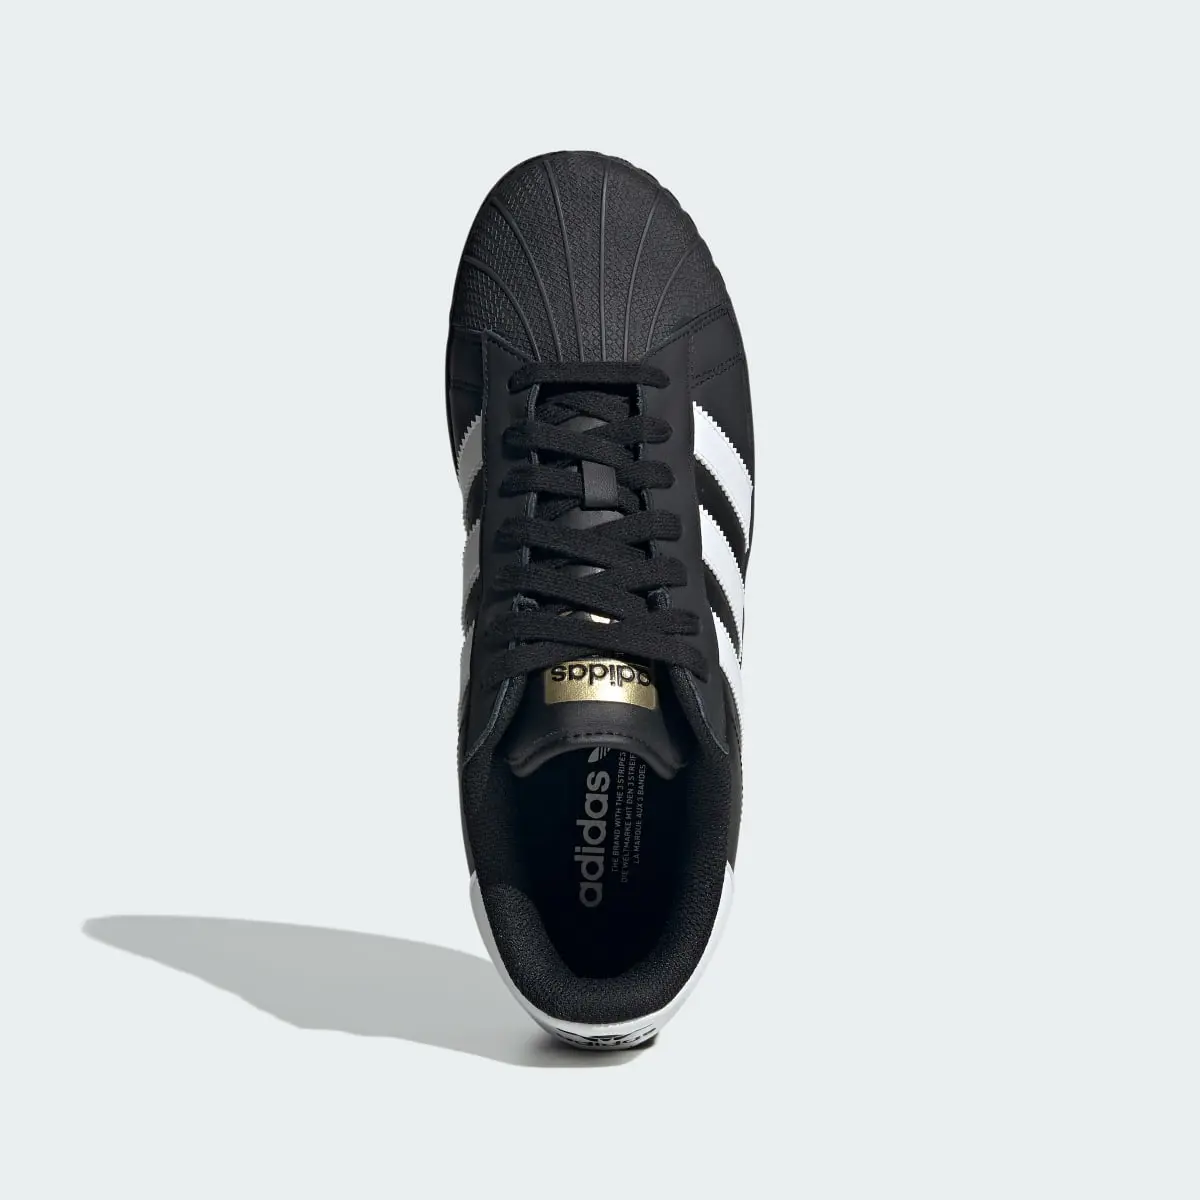 Adidas Superstar XLG Ayakkabı. 3